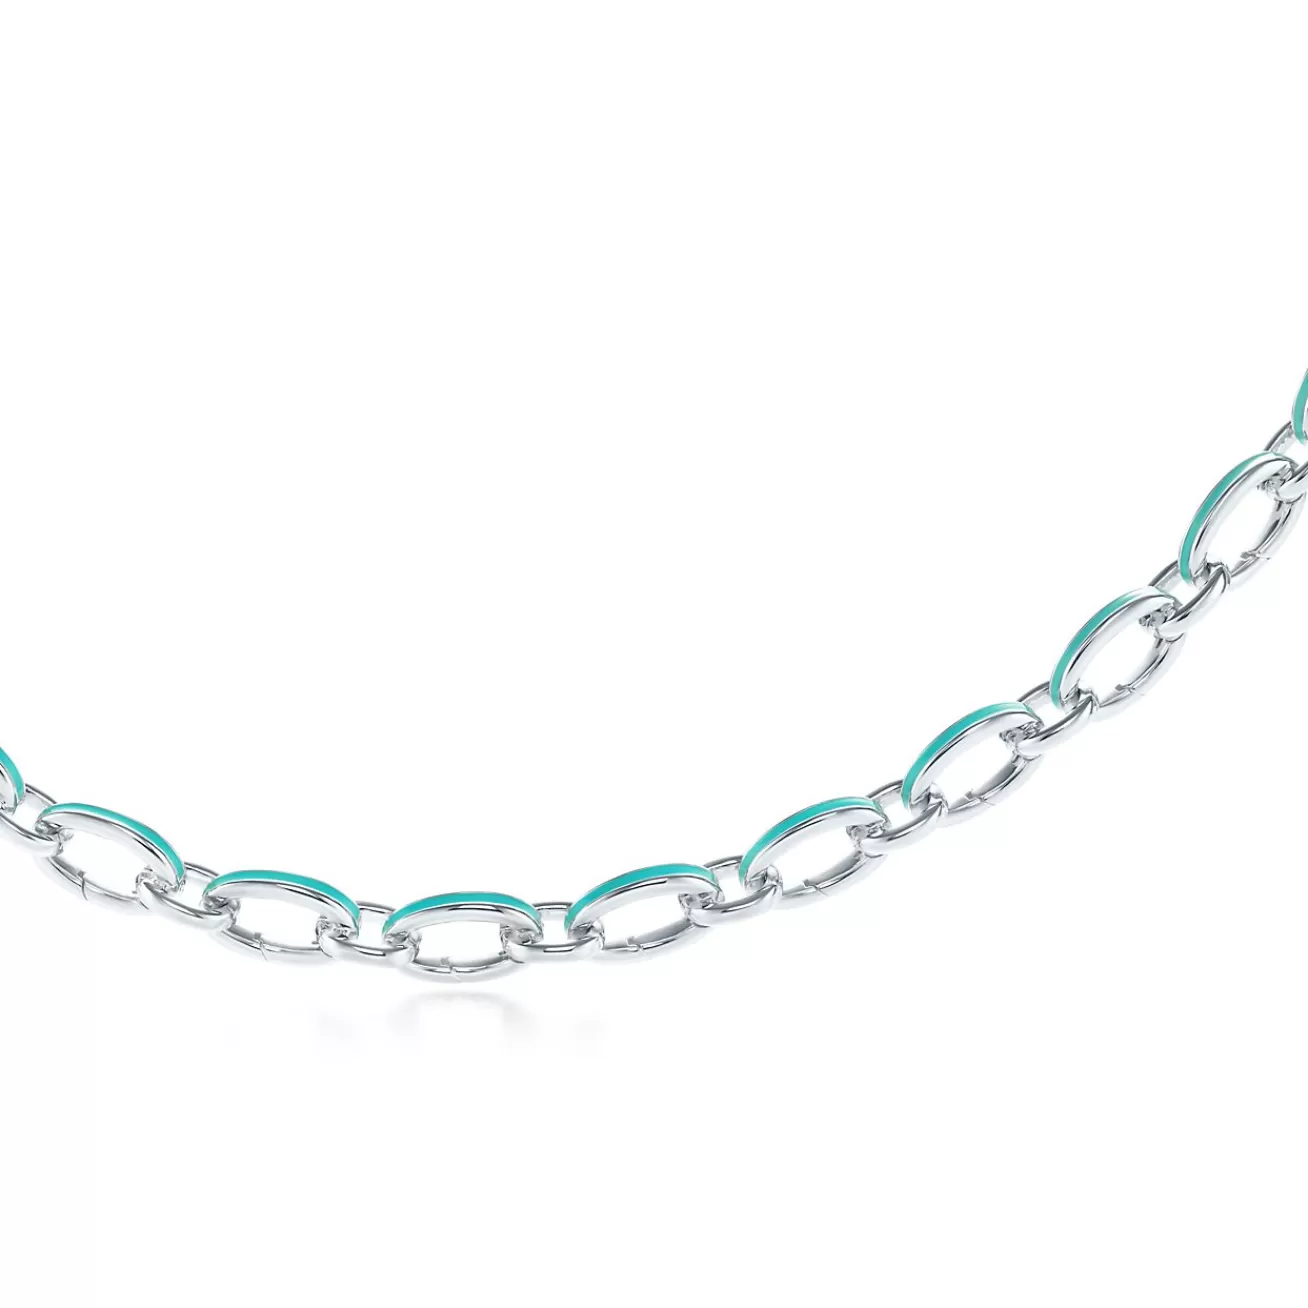 Tiffany & Co. Tiffany Blue® clasping link bracelet in silver with enamel finish, 7.5" long. | ^ Bracelets | Sterling Silver Jewelry